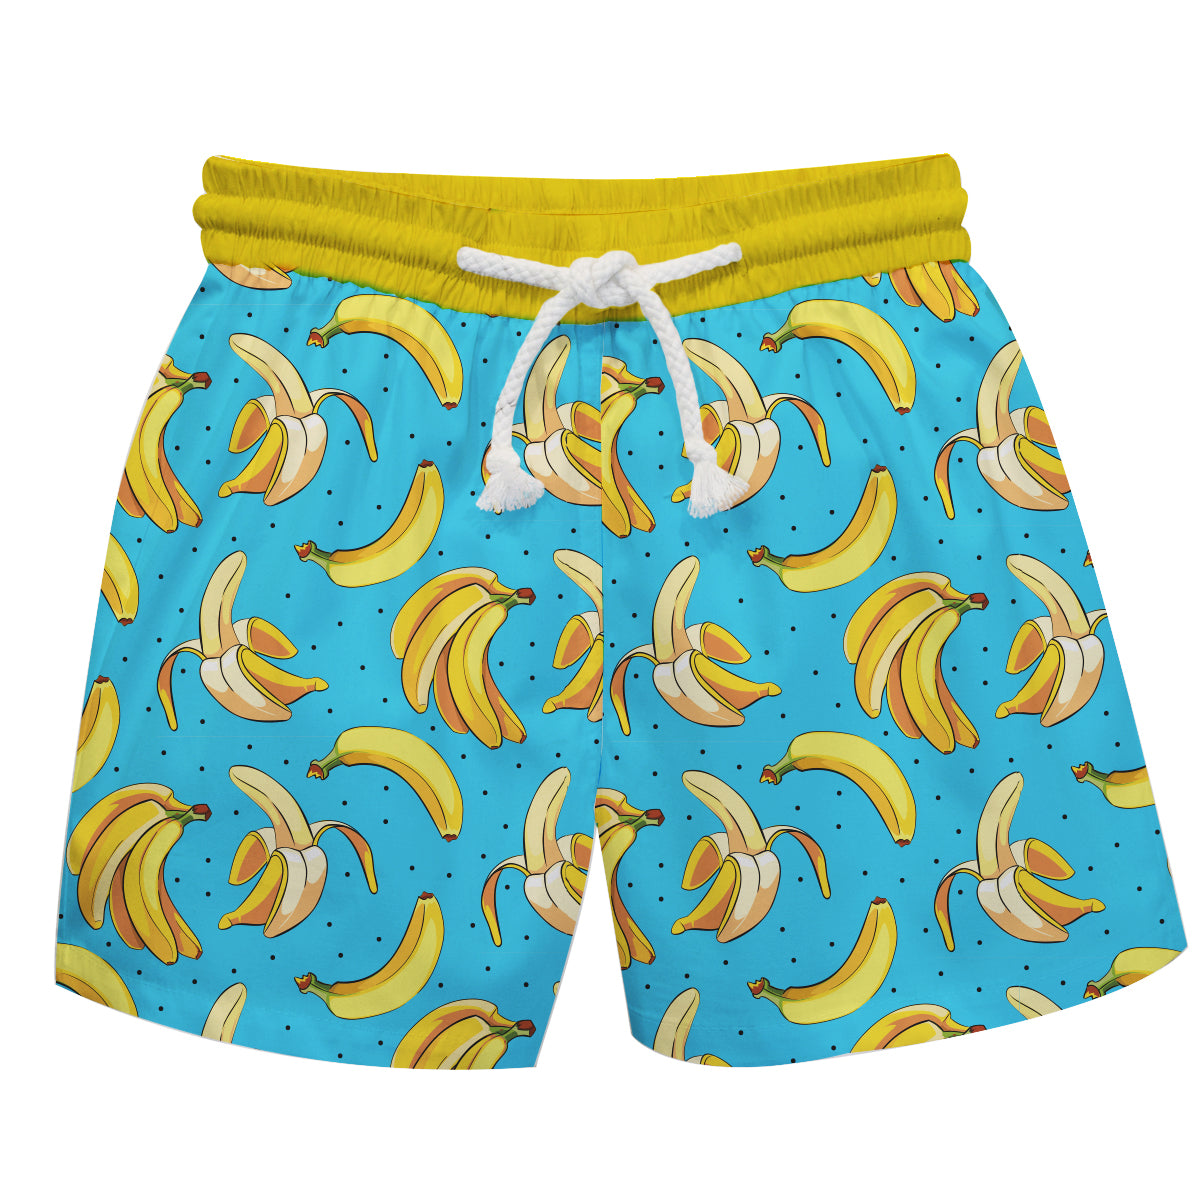 Bananas Print Aqua and Yellow Swimtrunk